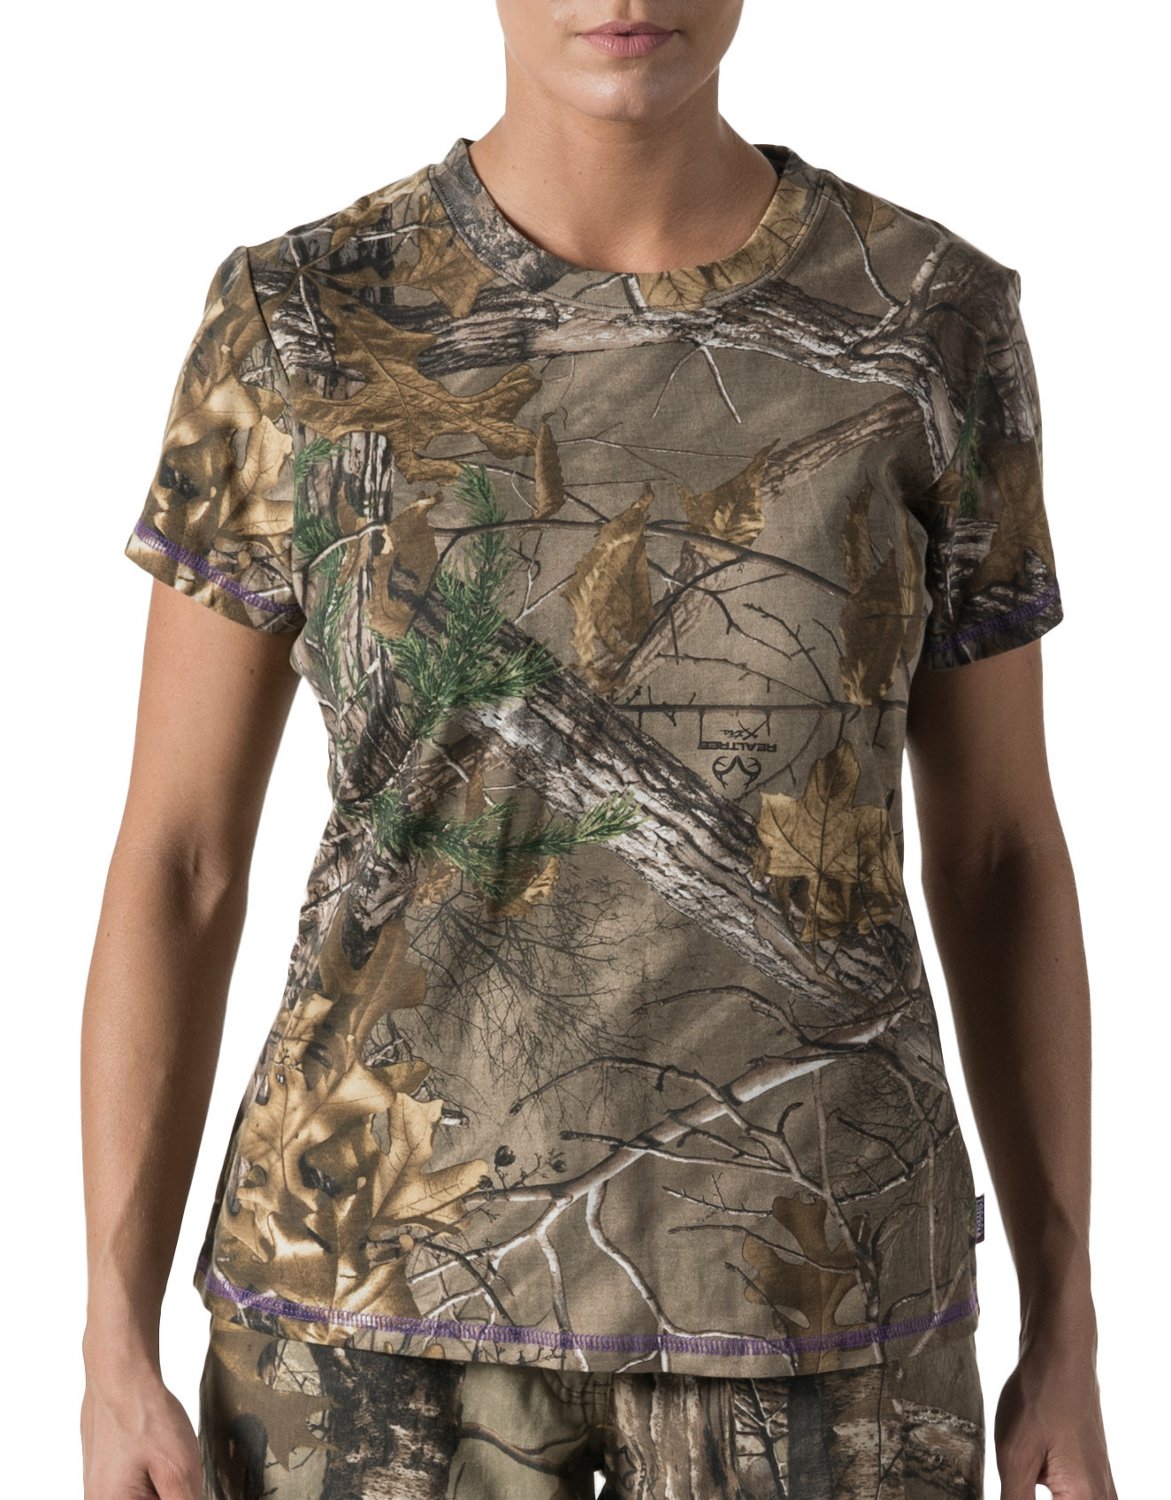 Camo Hunting Shirts & T-Shirts | Camouflage & Hunting Shirts | Academy